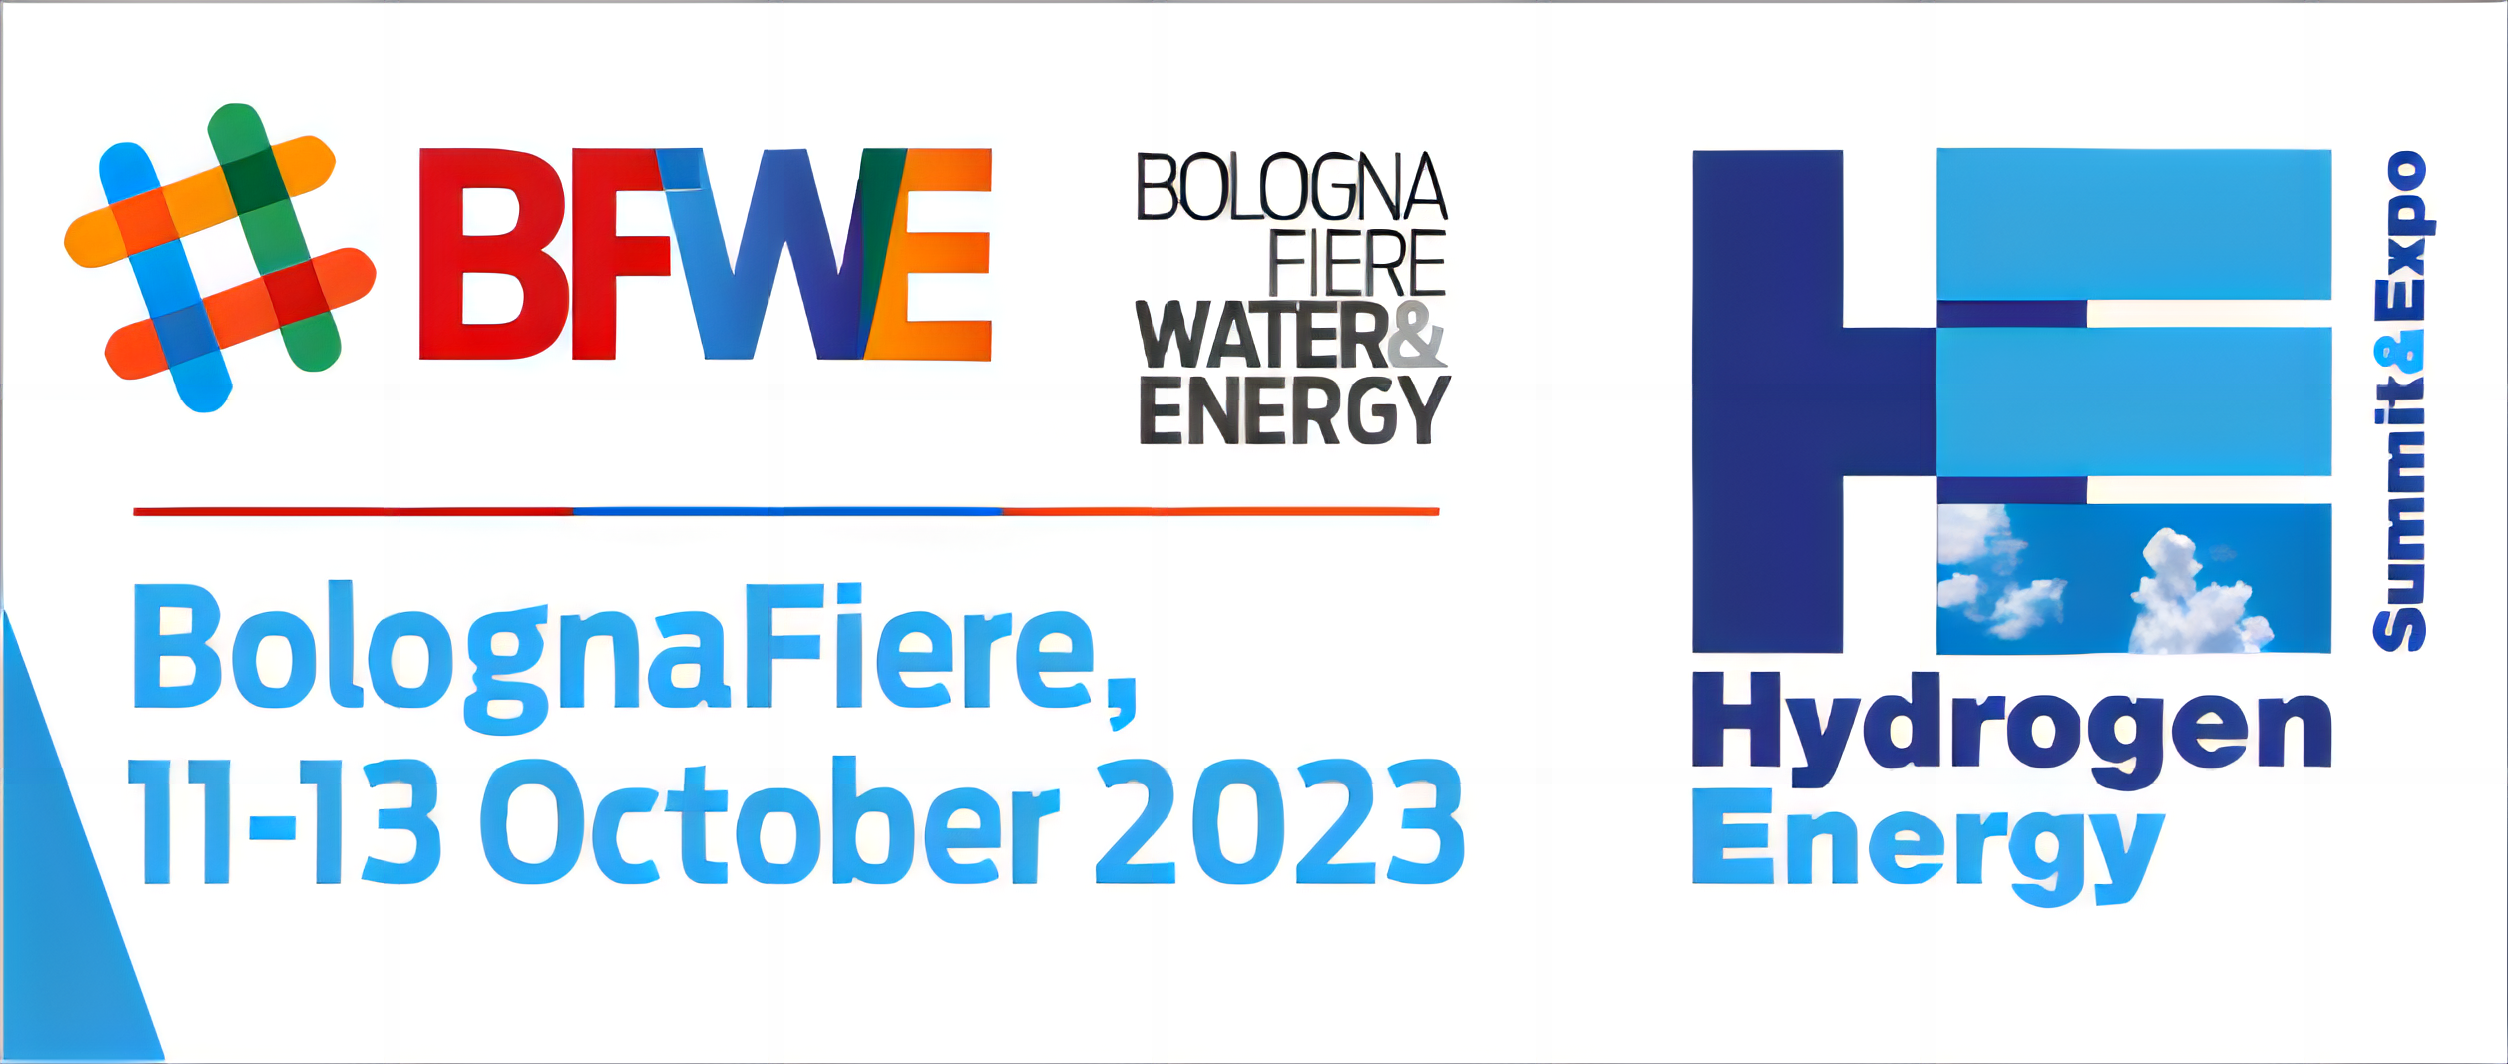 Hydrogen Energy Summit&Expo